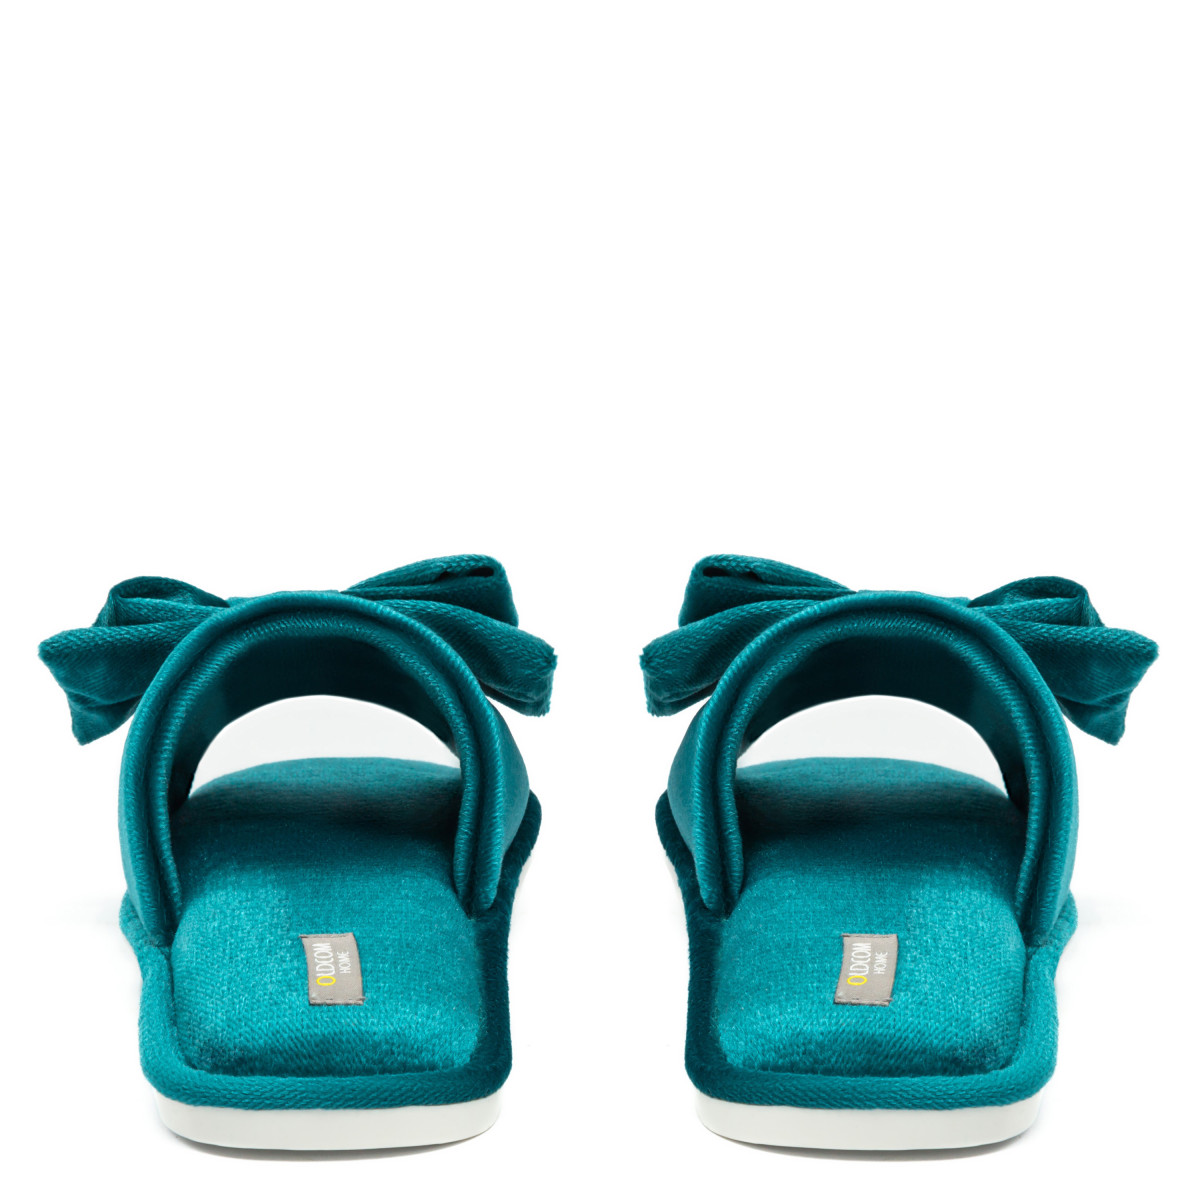 Women's Home slippers CHARM, Verde Turcoaz